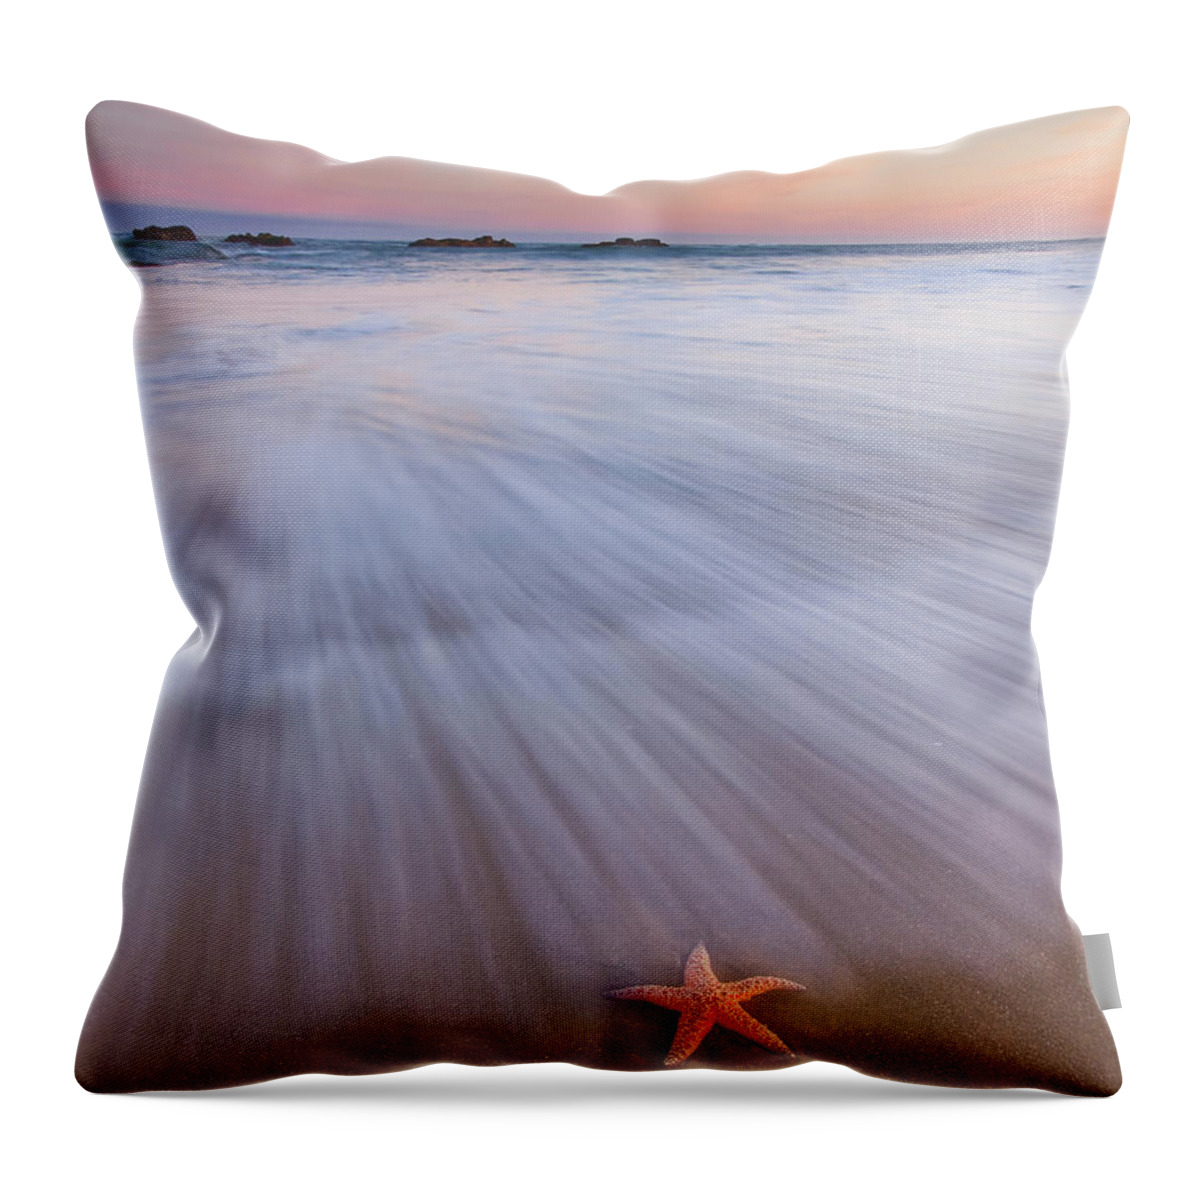 Ocean Throw Pillow featuring the photograph Seastar Sunrise by Darren White